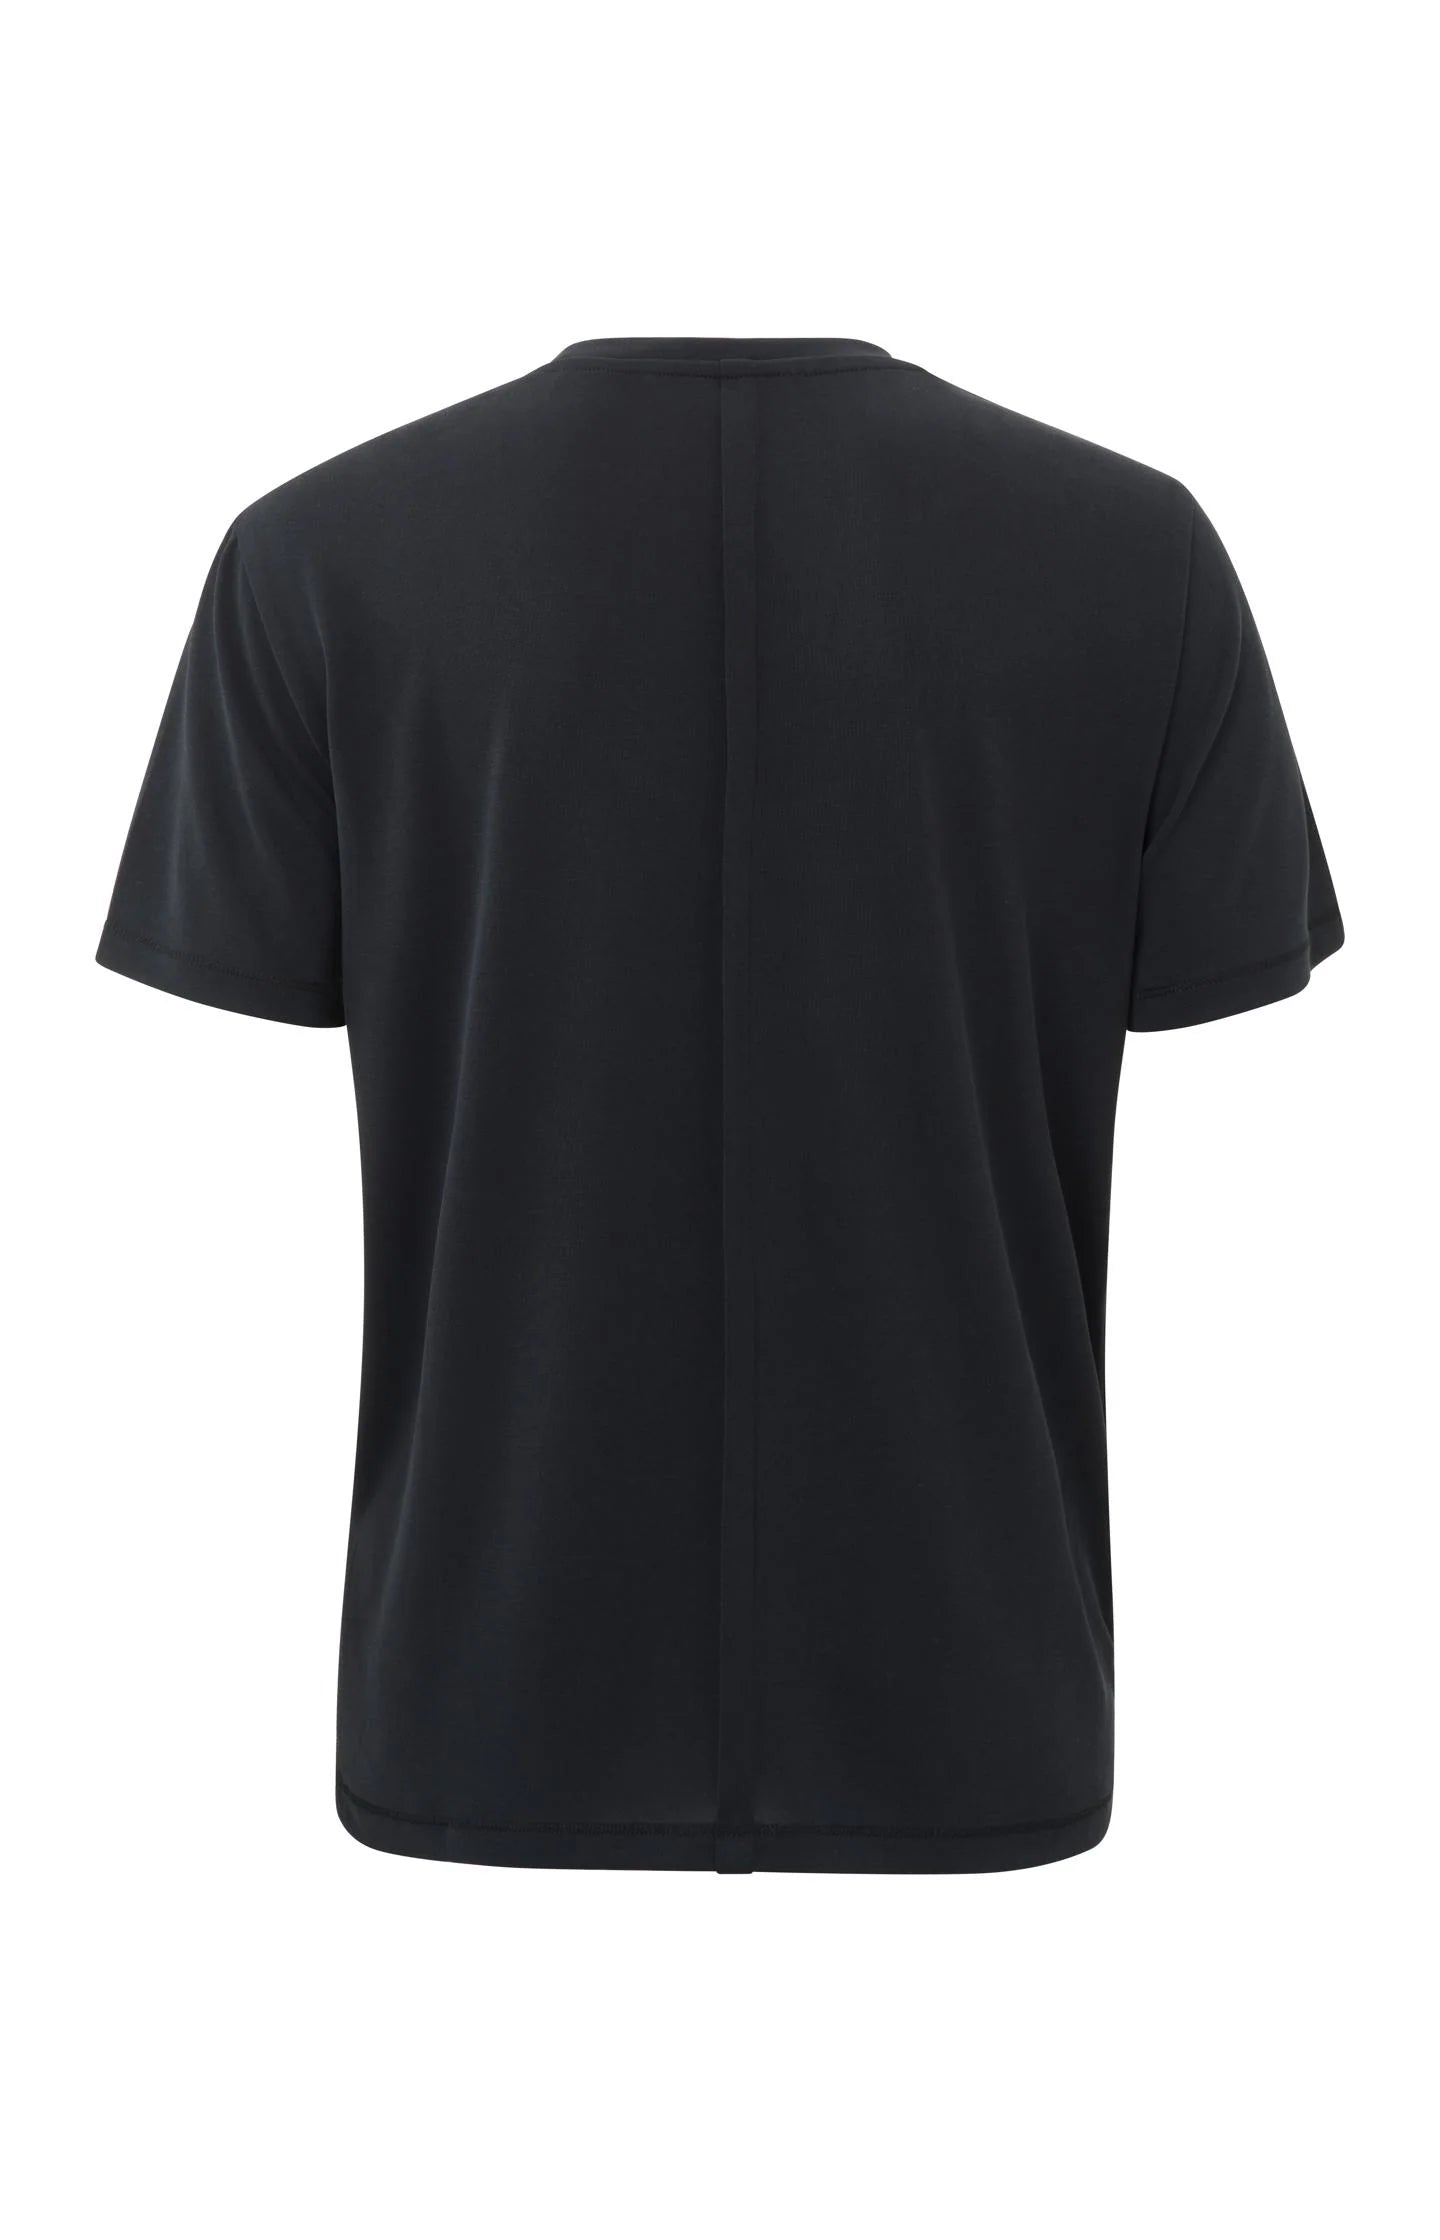 Short Sleeve T-Shirt With Round Neck & Seam Detail